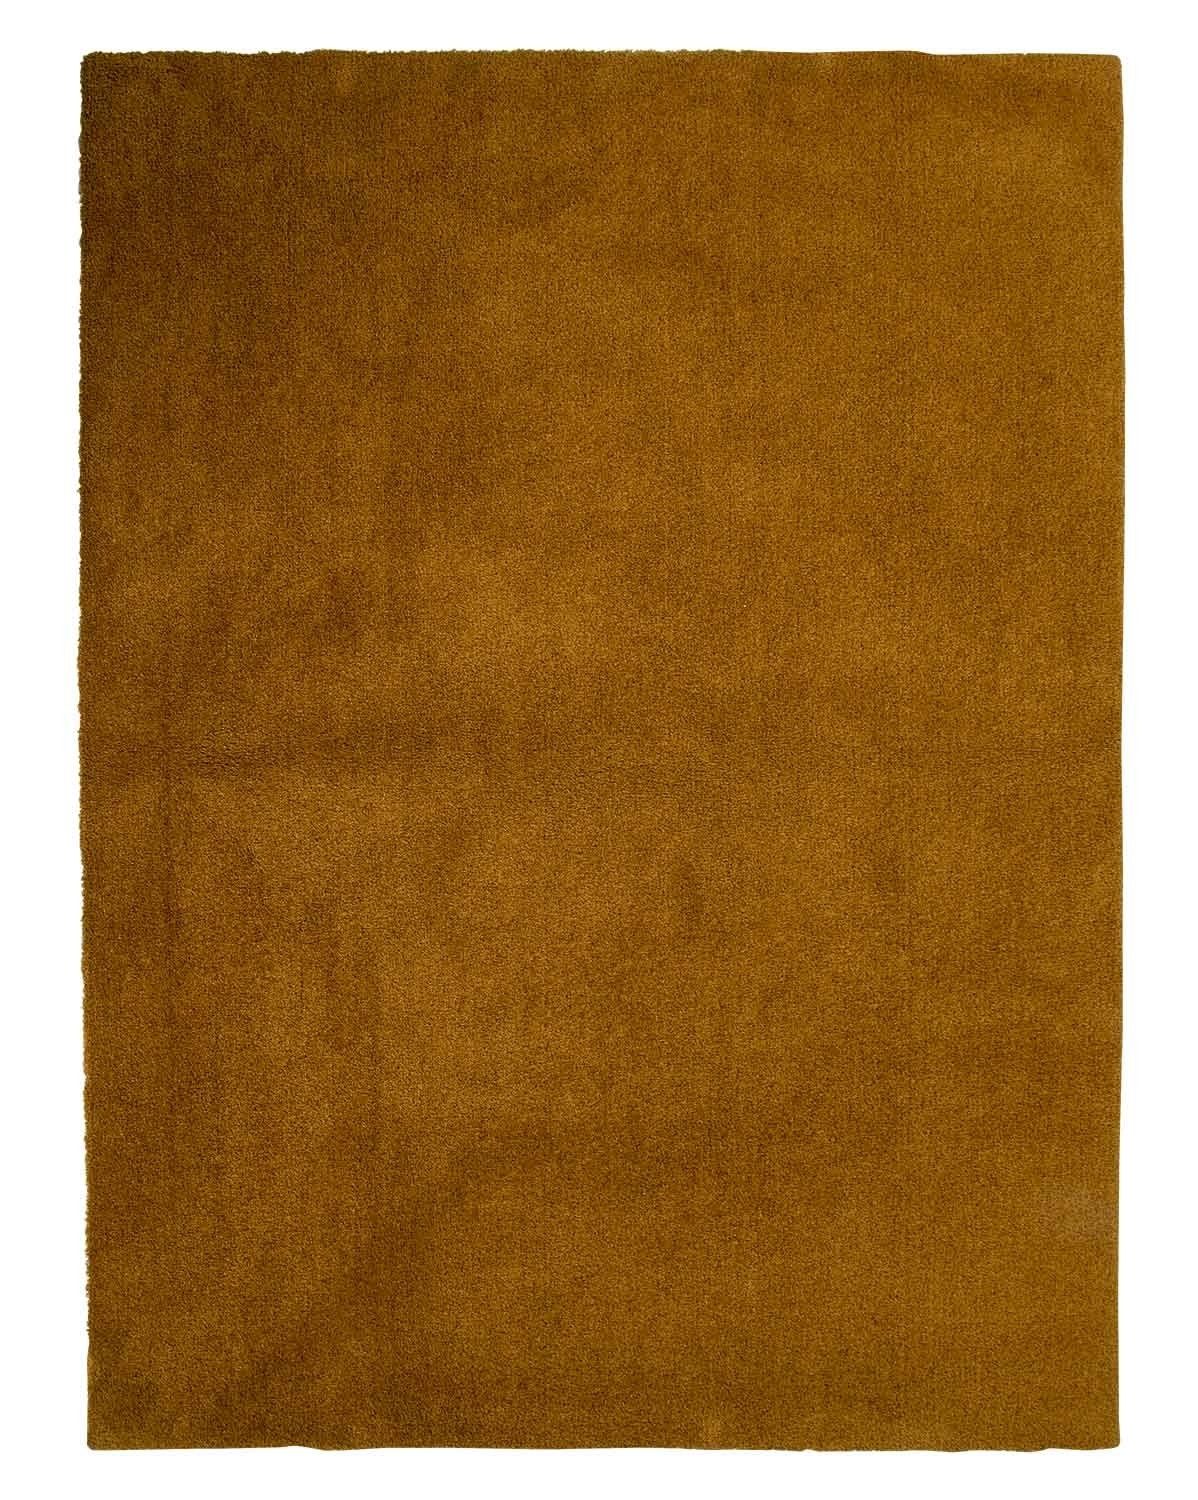 Teppich FEEL COSY, Polyester, Senffarben, 80 x 150 cm, Balta Rugs, rechteckig, Höhe: 11 mm Goldfarben